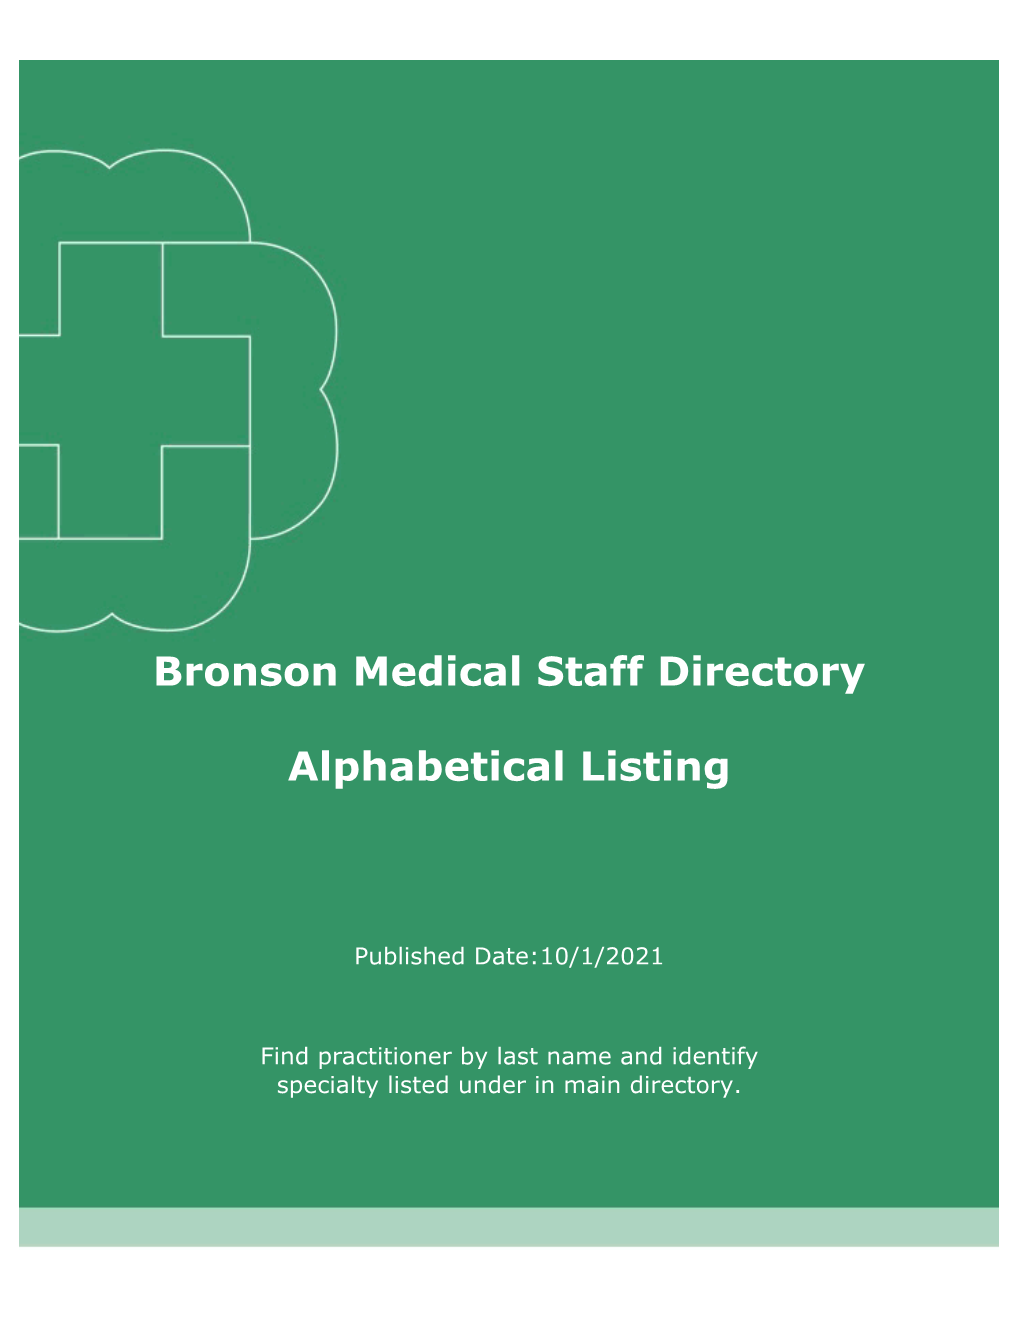 Bronson Medical Staff Directory Alphabetical Listing